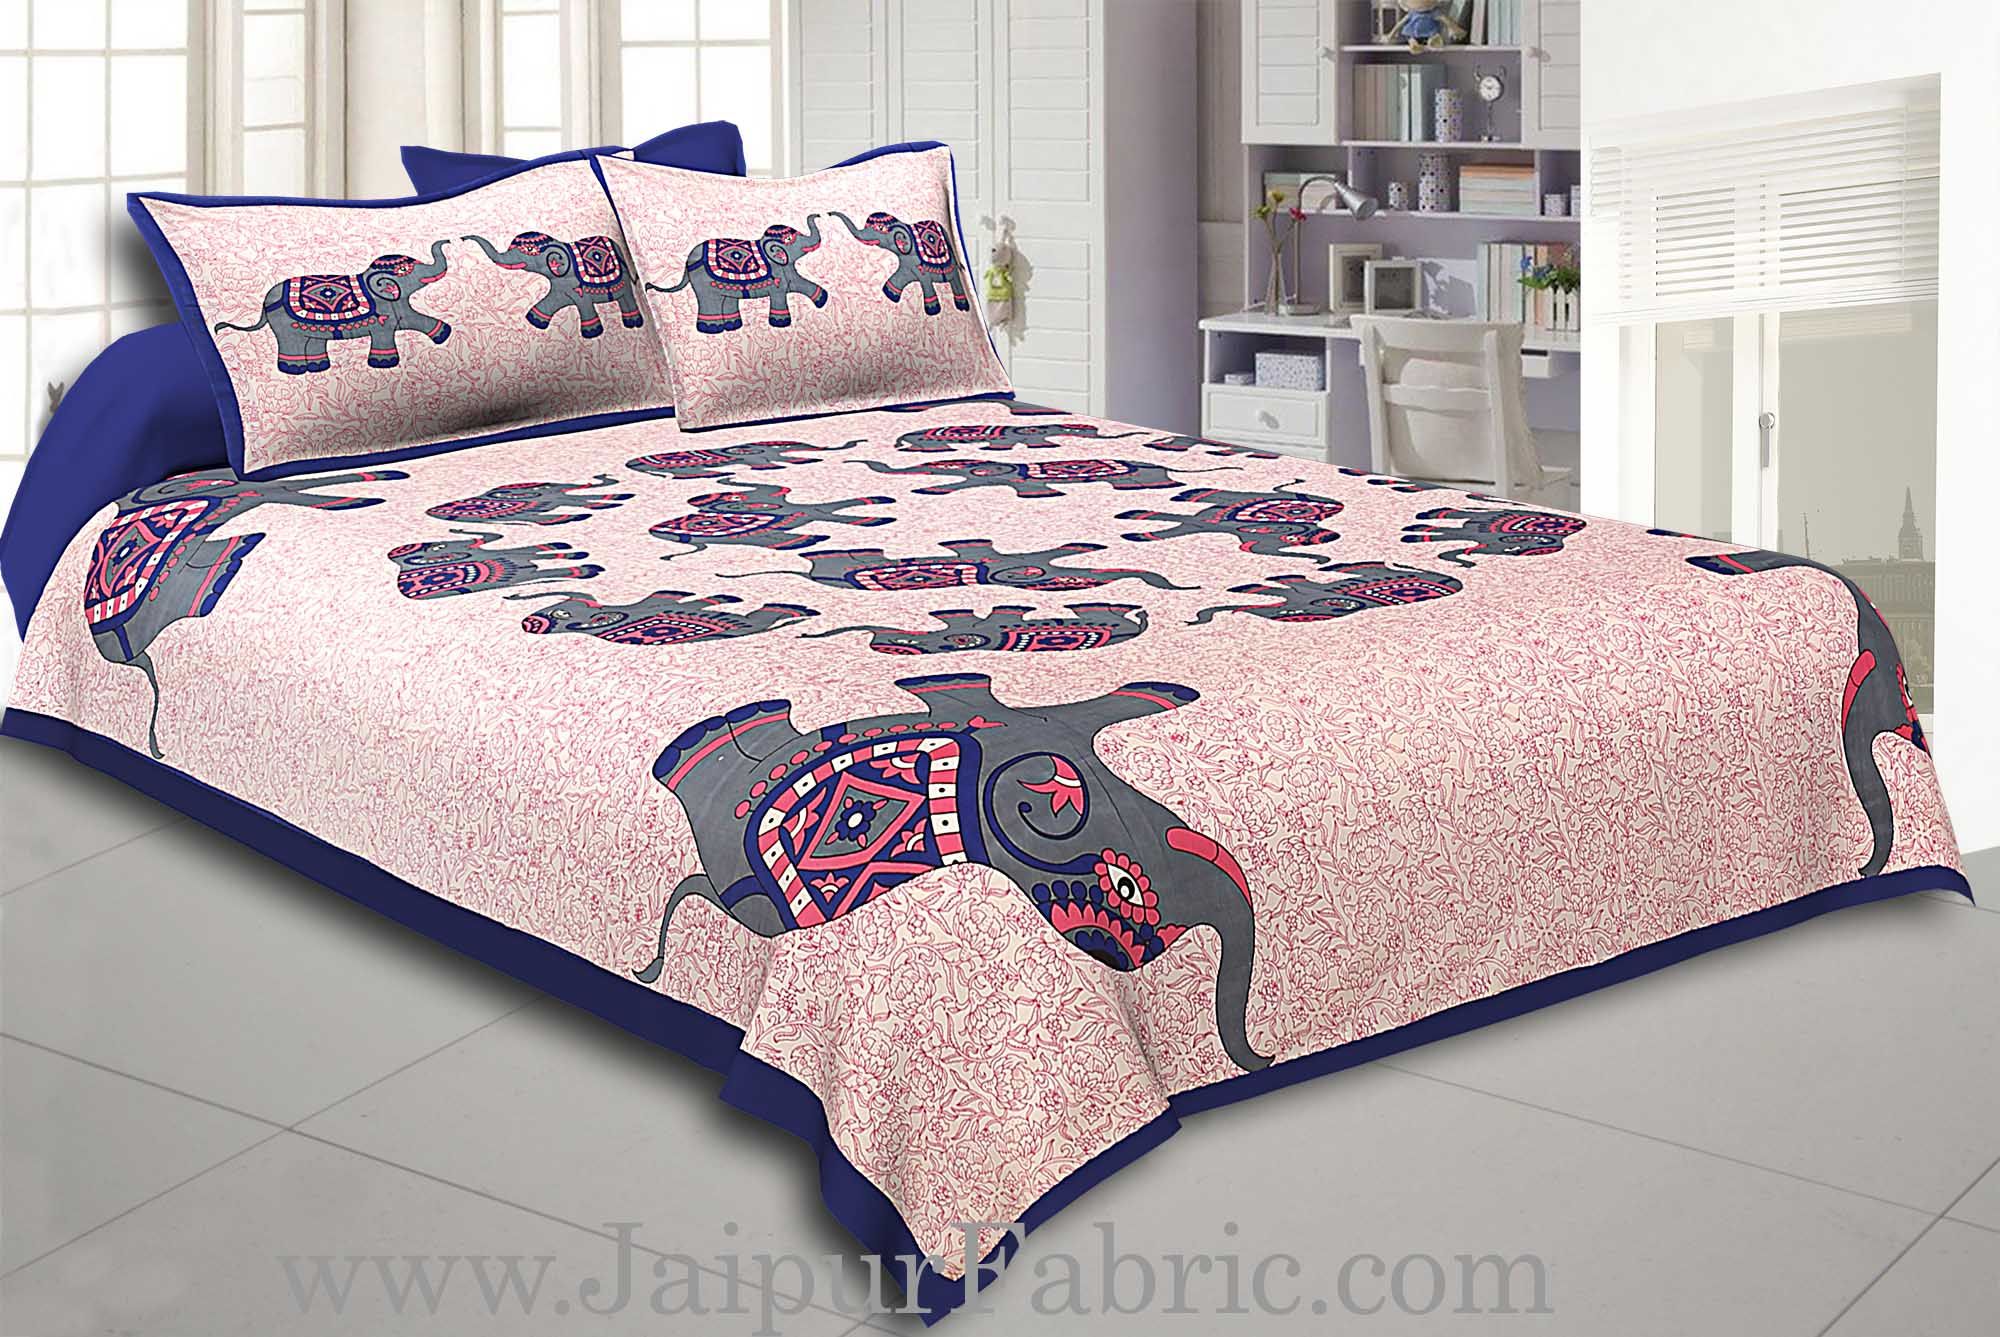 Blue Border Elephant in Round Shape Cotton Double Bedsheet